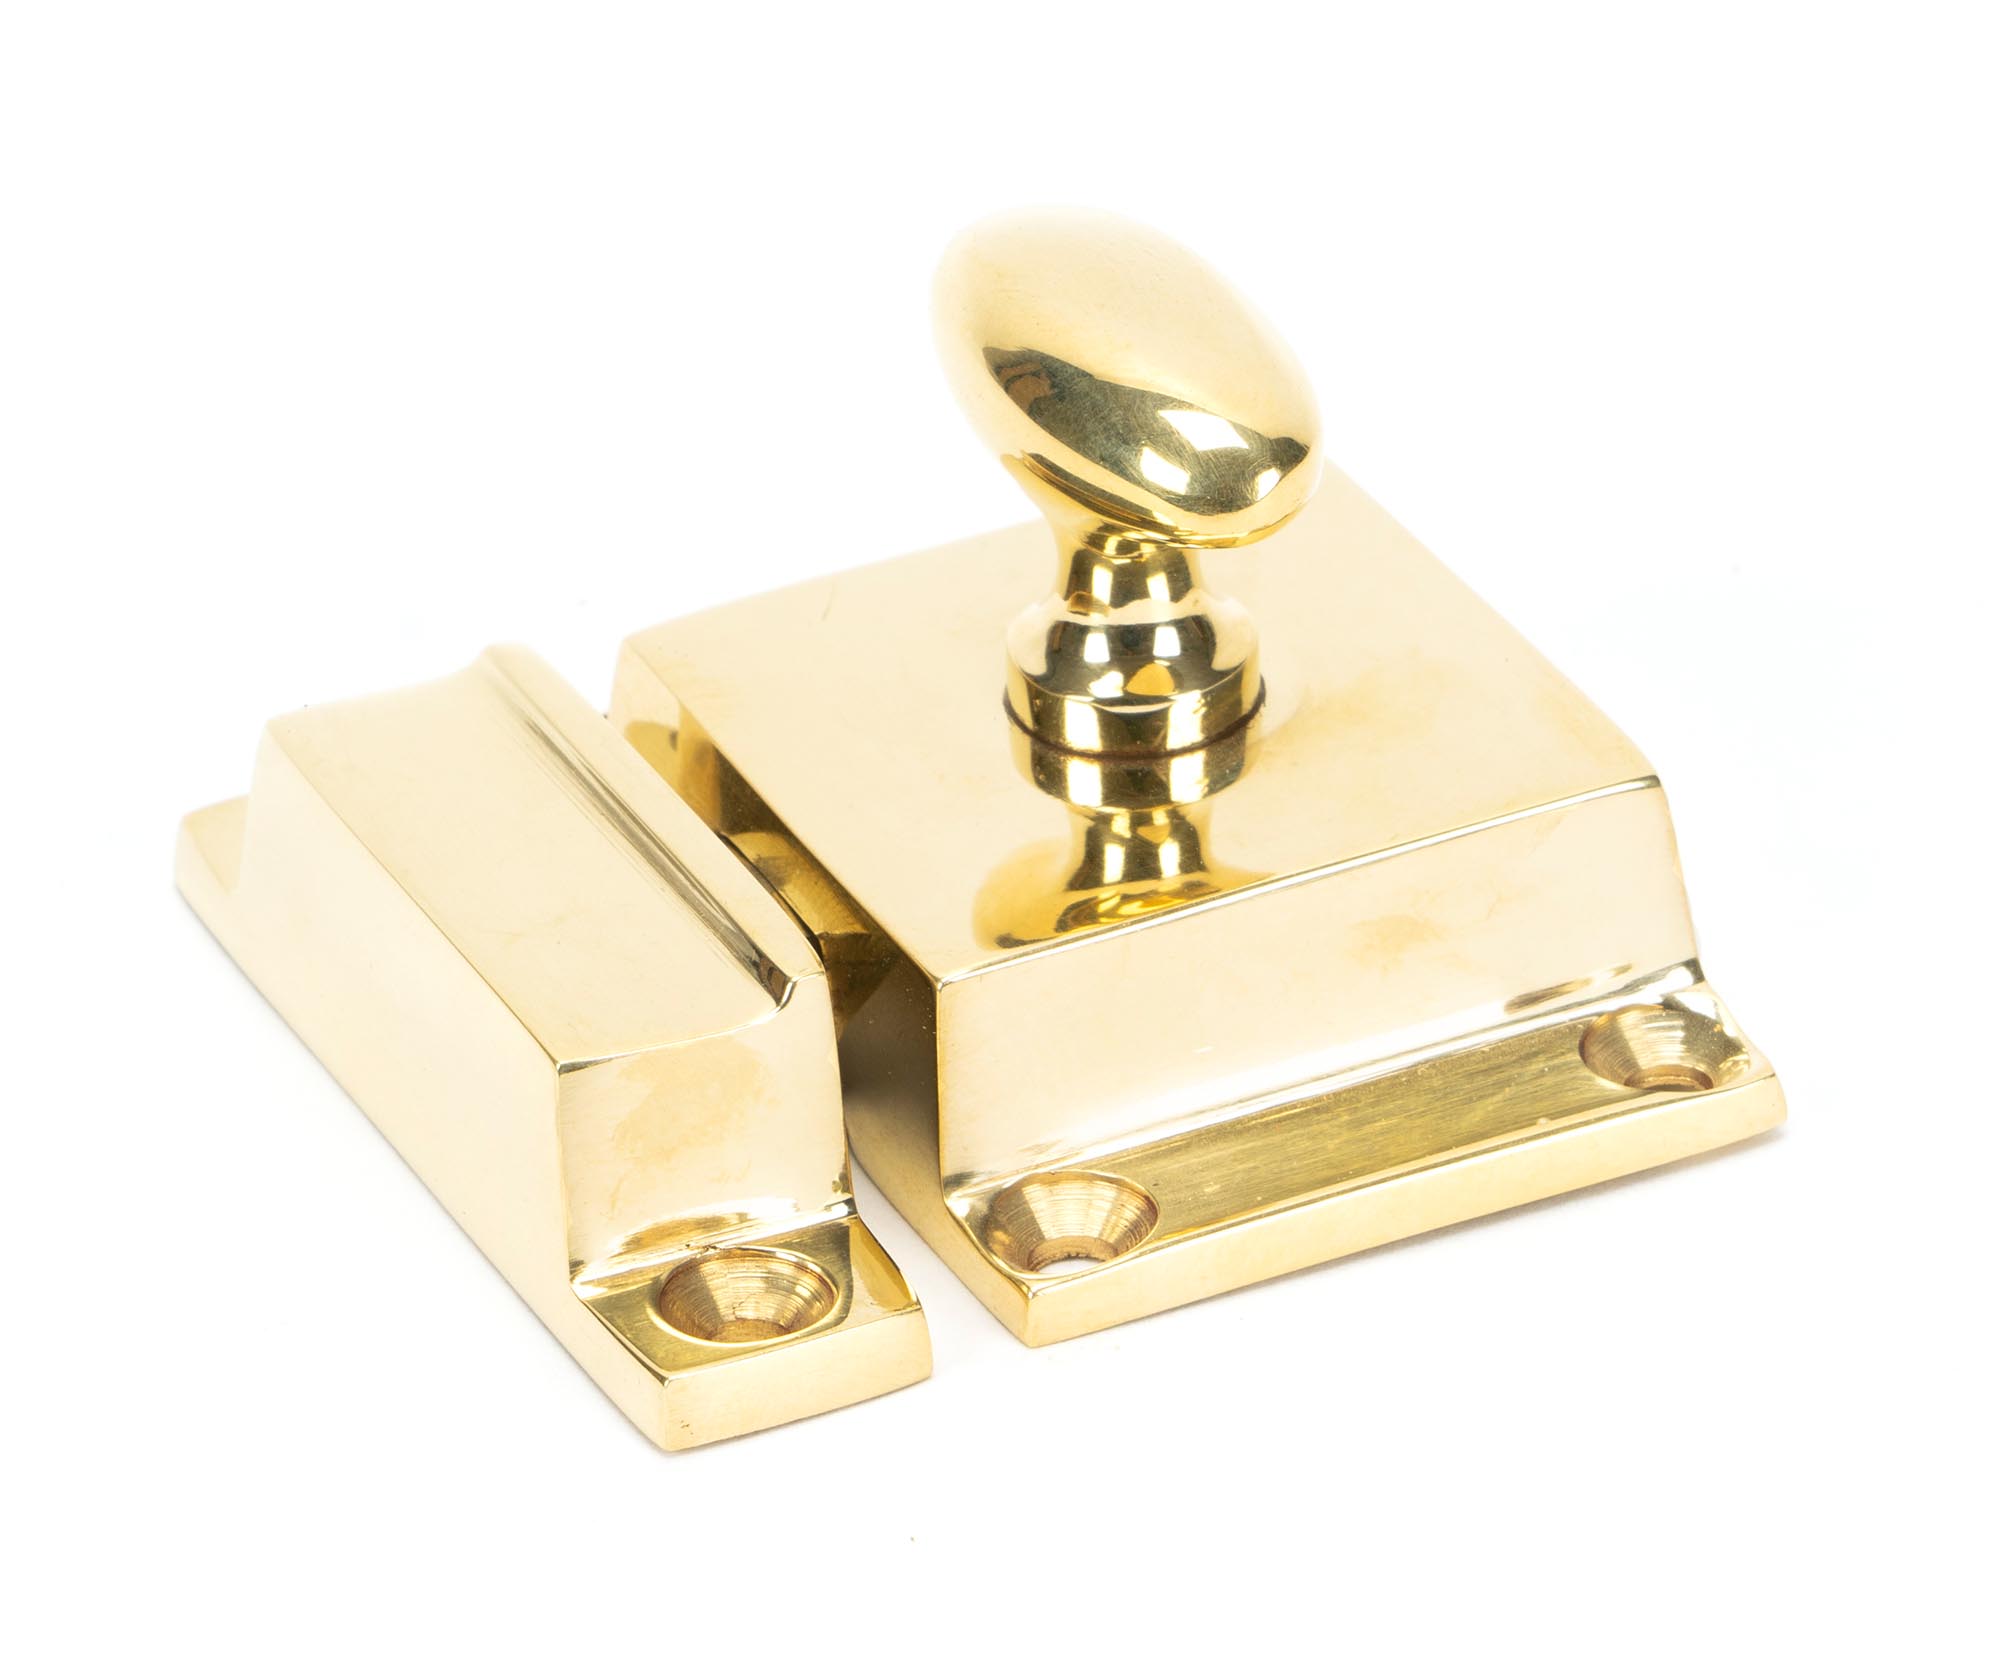 Polished Brass Cabinet Latch